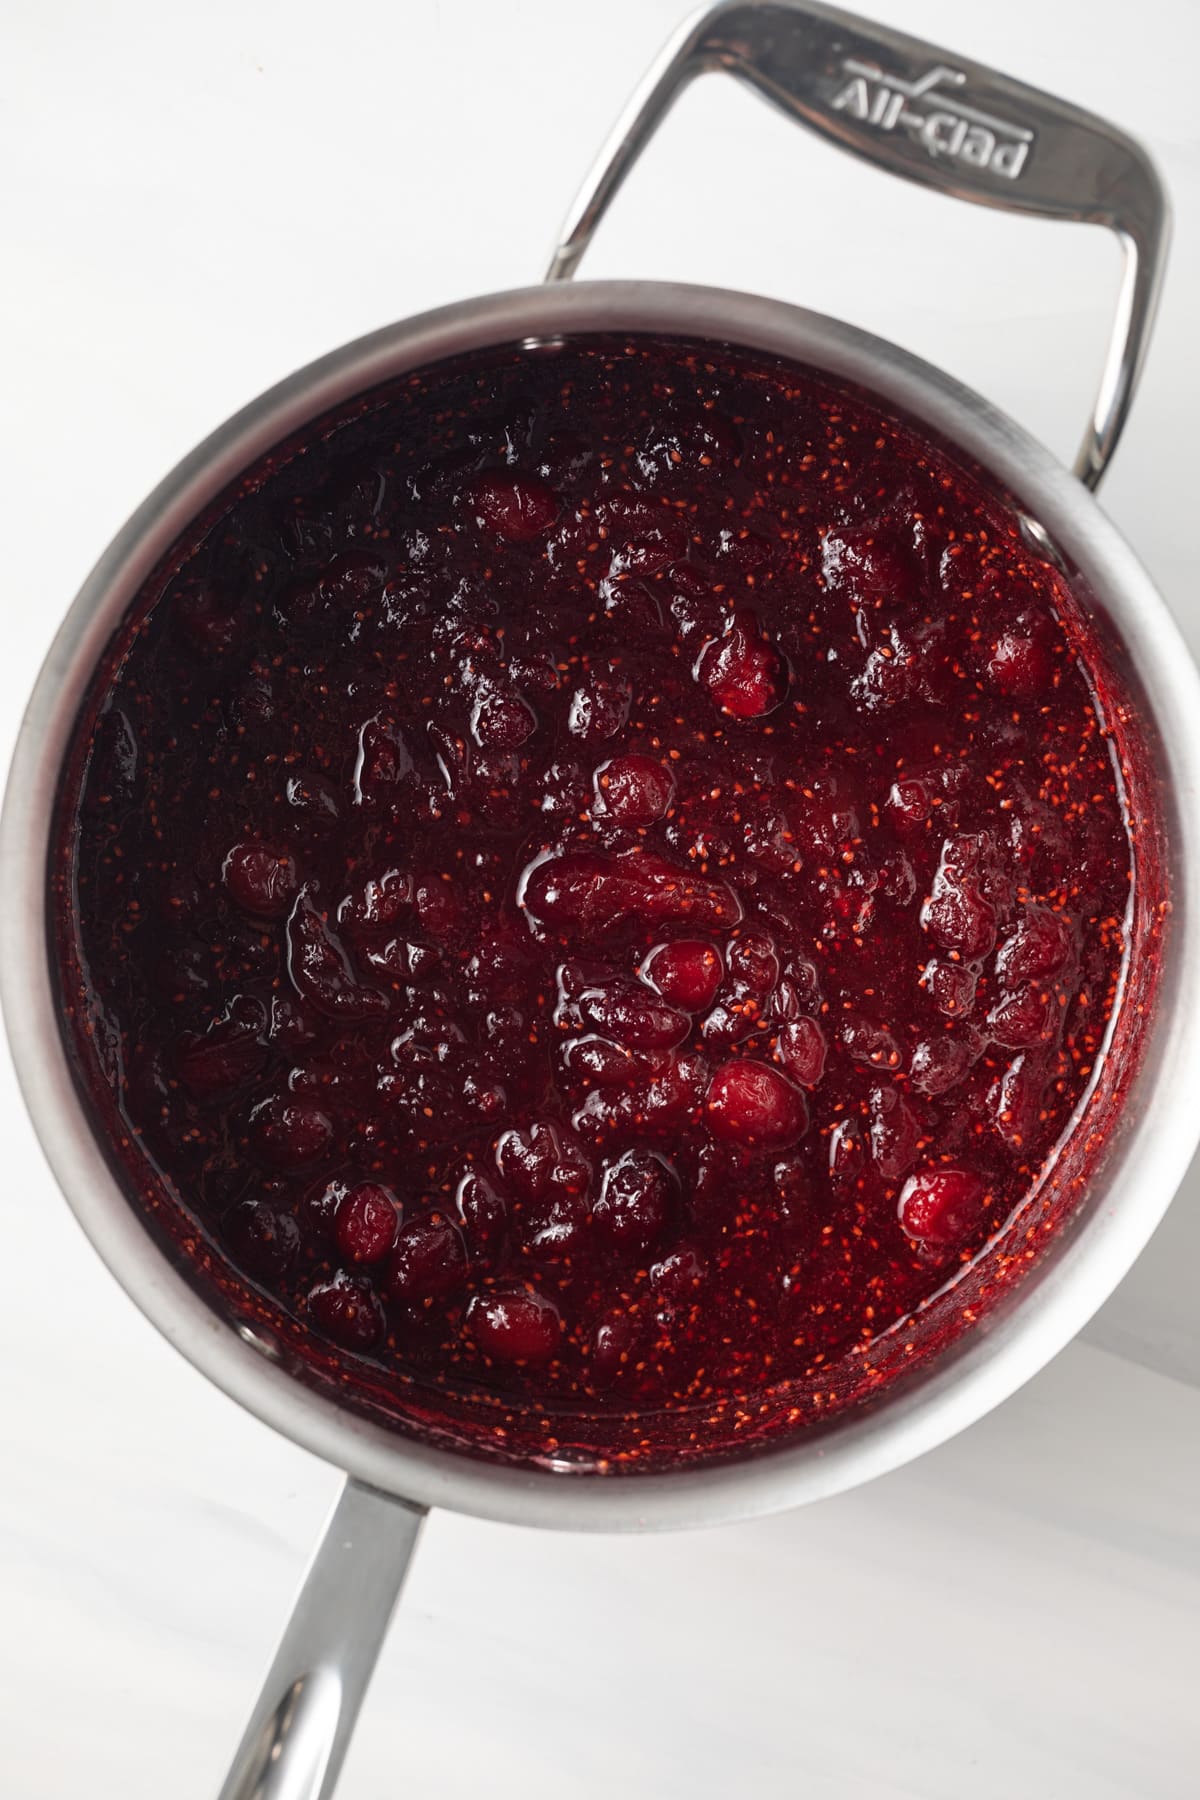 Cranberry sauce in a saucepan.